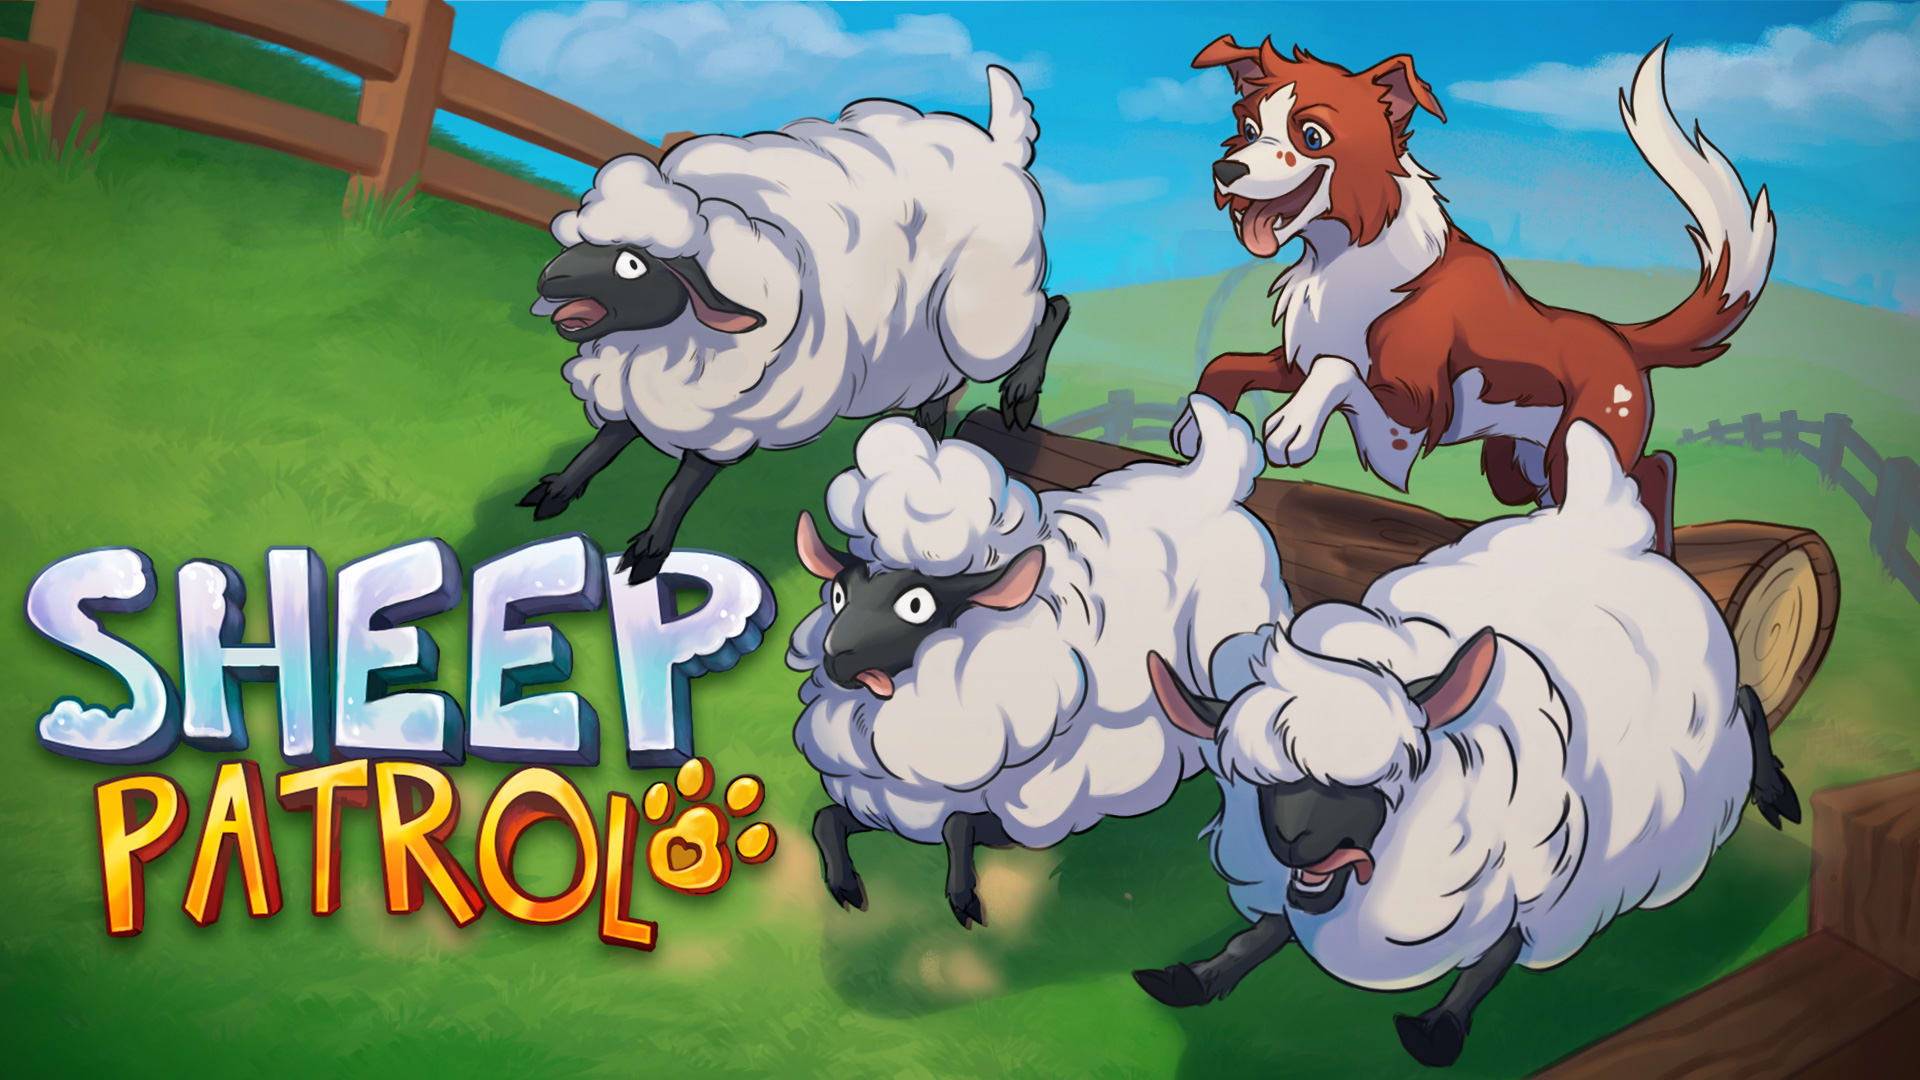 Sheep Patrol